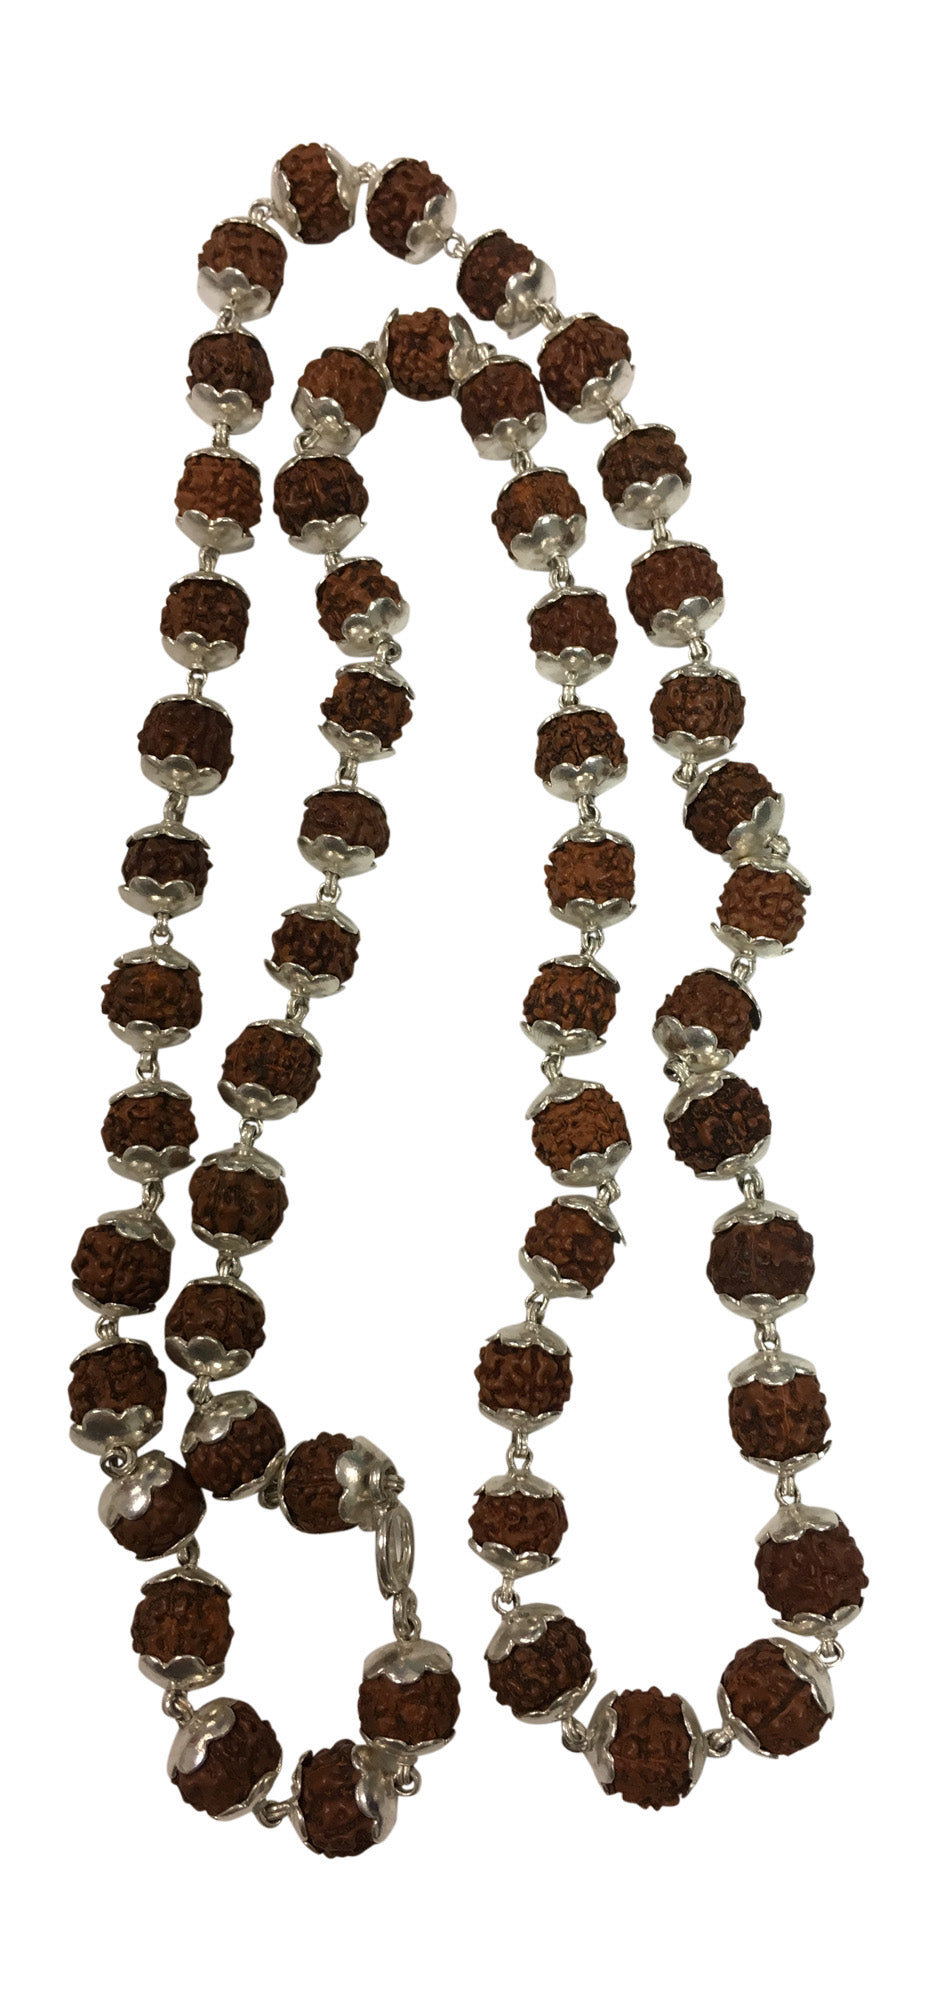 Handmade 54ct Indian Pure Silver Capped Rudraksha Yoga Mala Bead Necklace - Ambali Fashion Necklaces accessory, bohemian, boho, casual, classic, eastern, ethnic, gypsy, hippie, meditation, ne